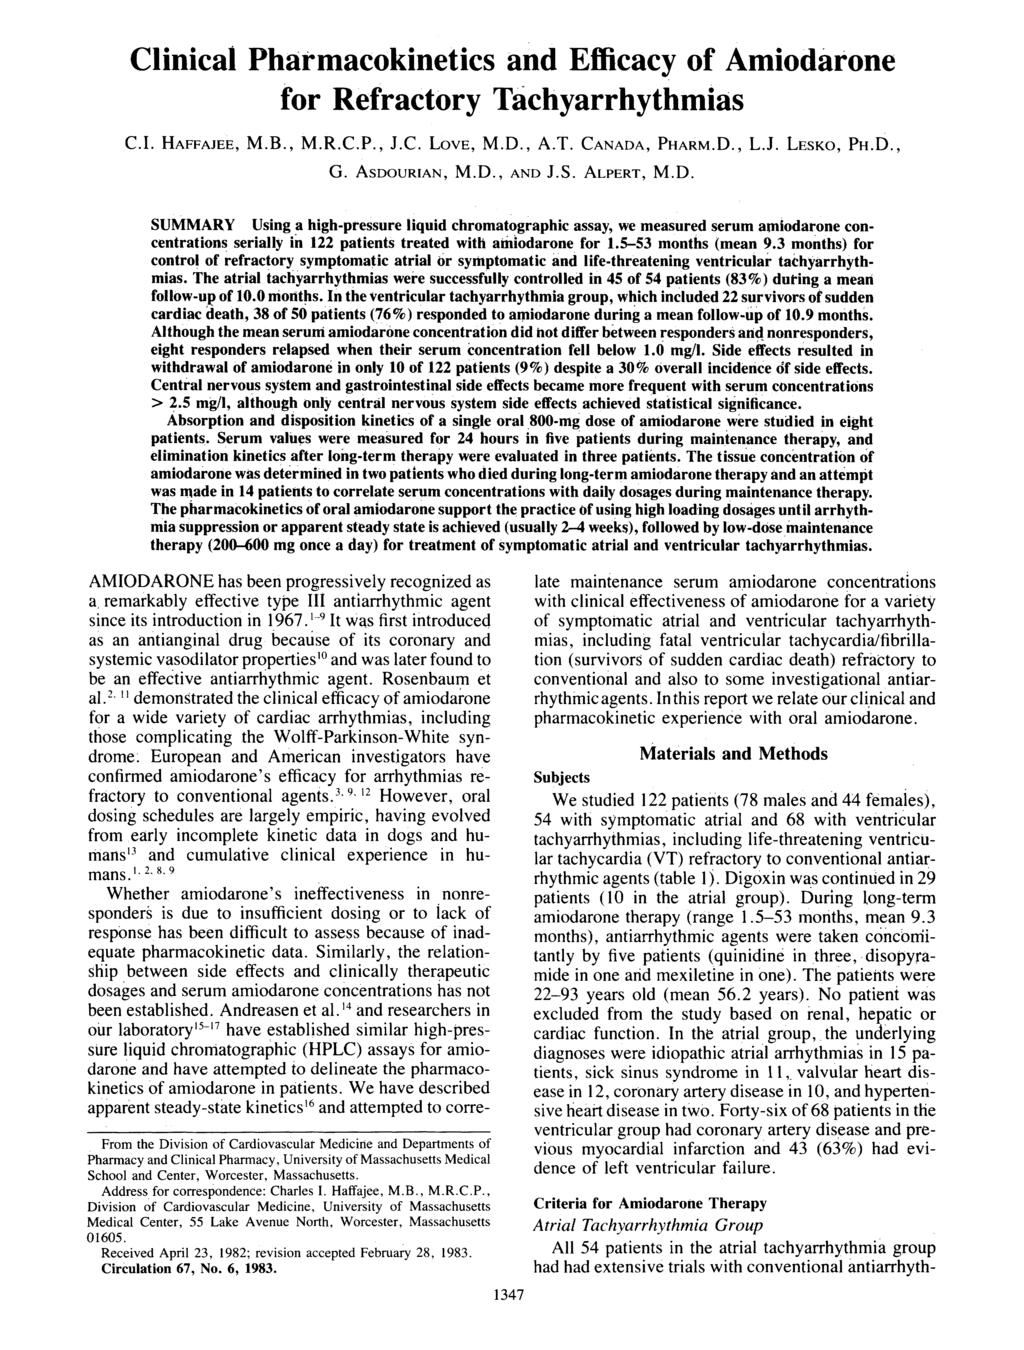 Clinical Pharmacokinetics and Efficacy of Amiodarone for Refractory Tachyarrhythmias C.I. HAFFAJEE, M.B., M.R.C.P., J.C. LOVE, M.D., A.T. CANADA, PHARM. D., L. J. LESKO, PH.D., G. ASDOURIAN, M.D., AND J.